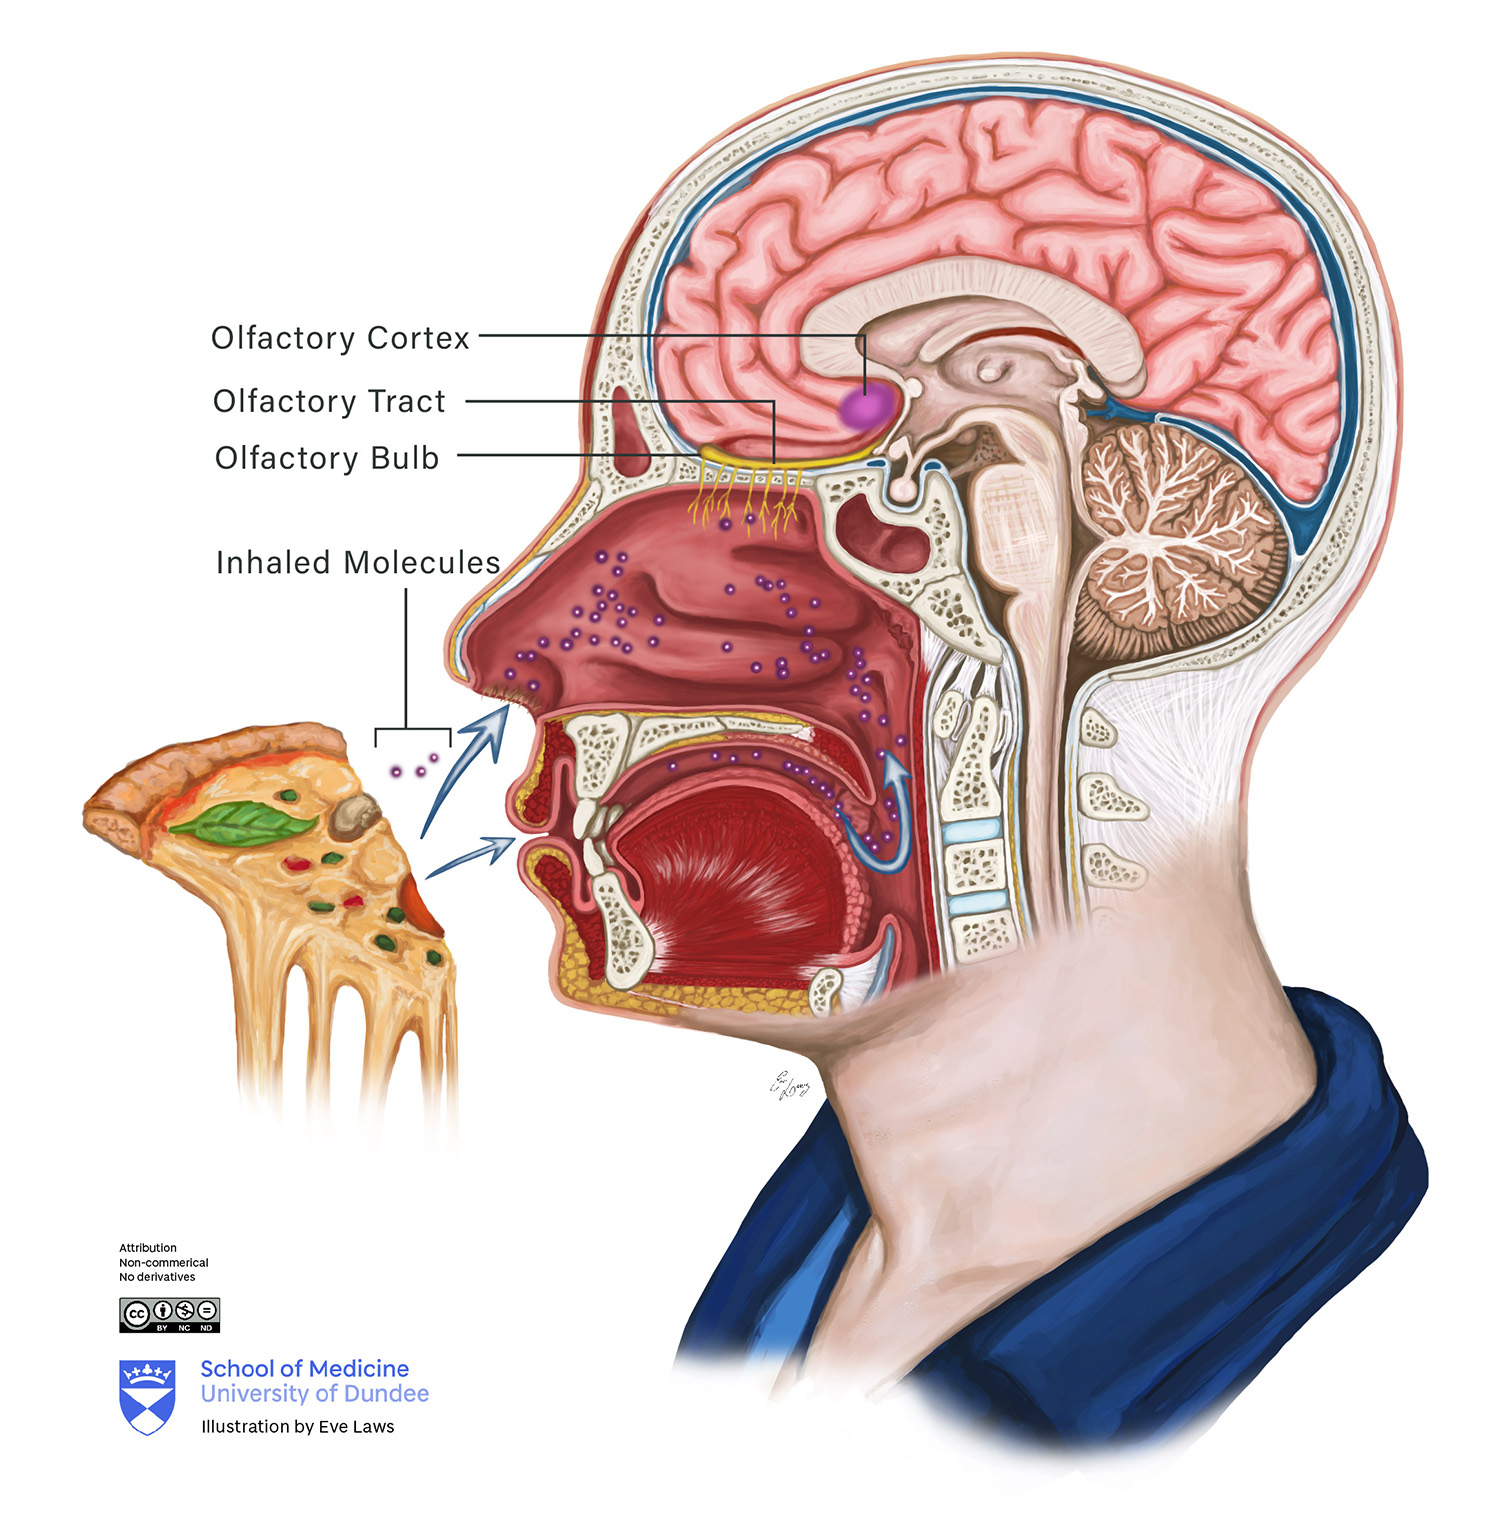 Olfactory pathway illustration at anatomical level